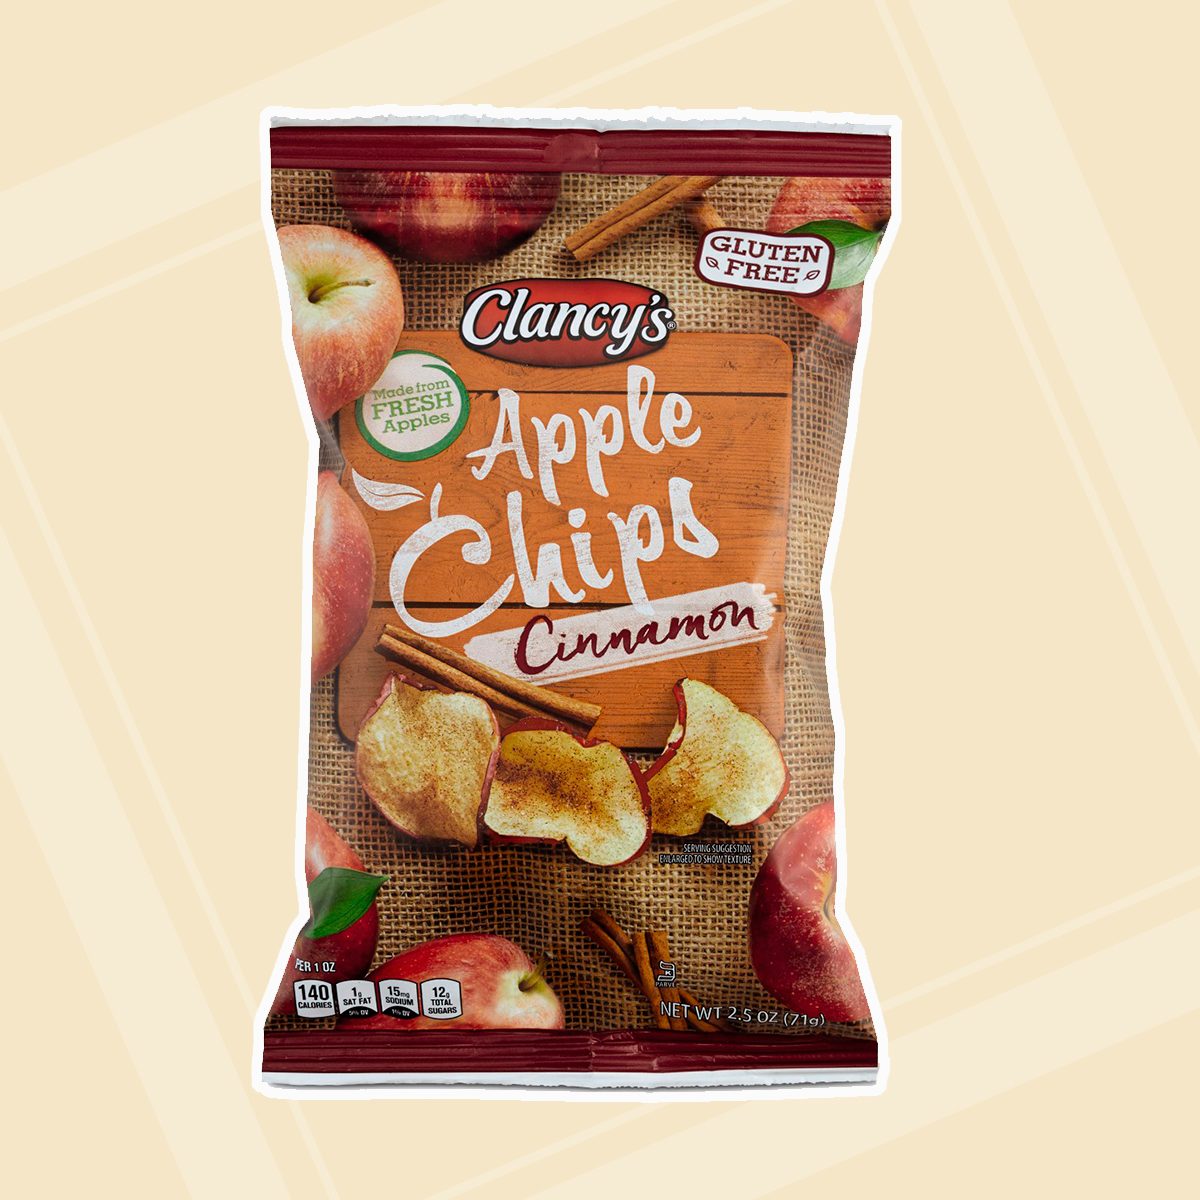 Clancy's Apple Chips Cinnamon